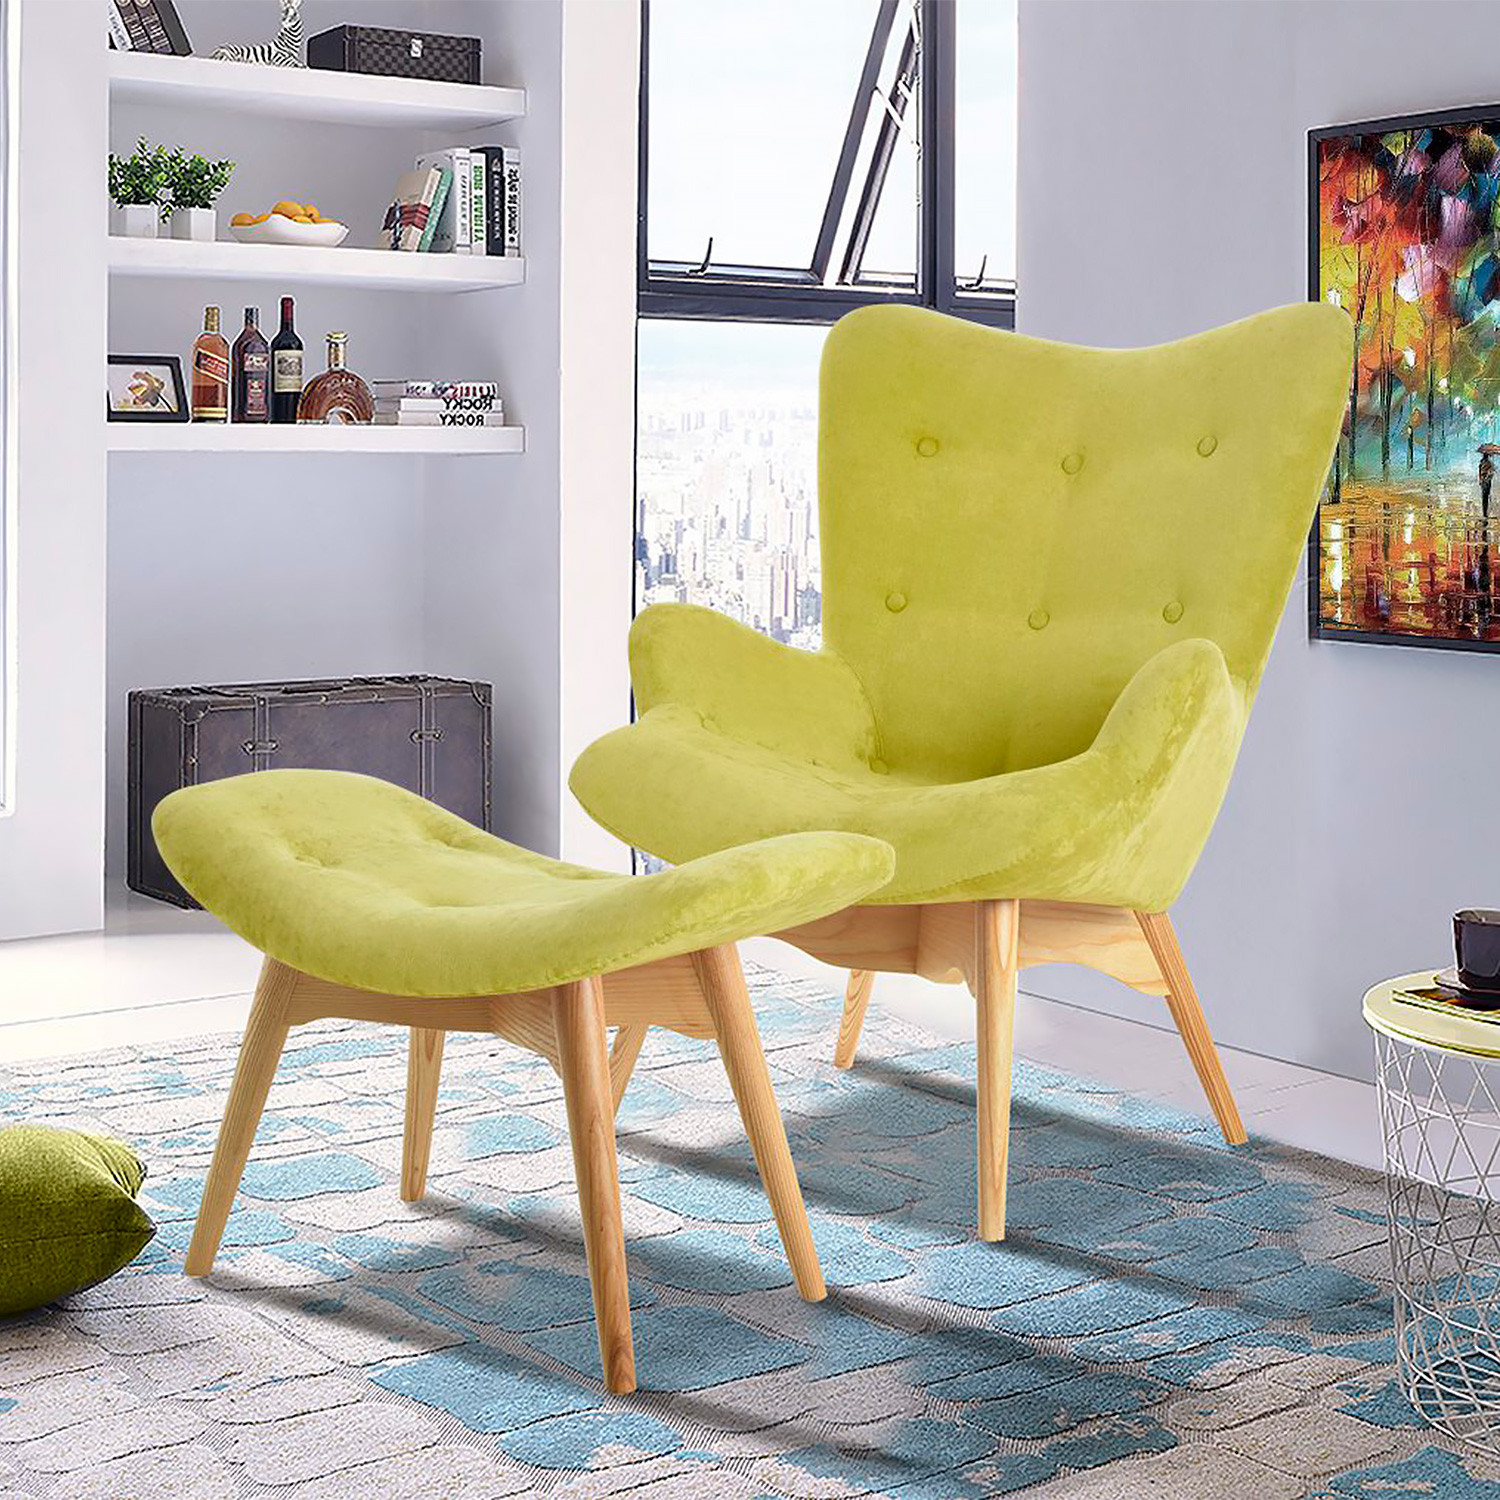 Лаунж кресла DC-917 оливковый / светлое дерево фото 1 — New Style of Furniture